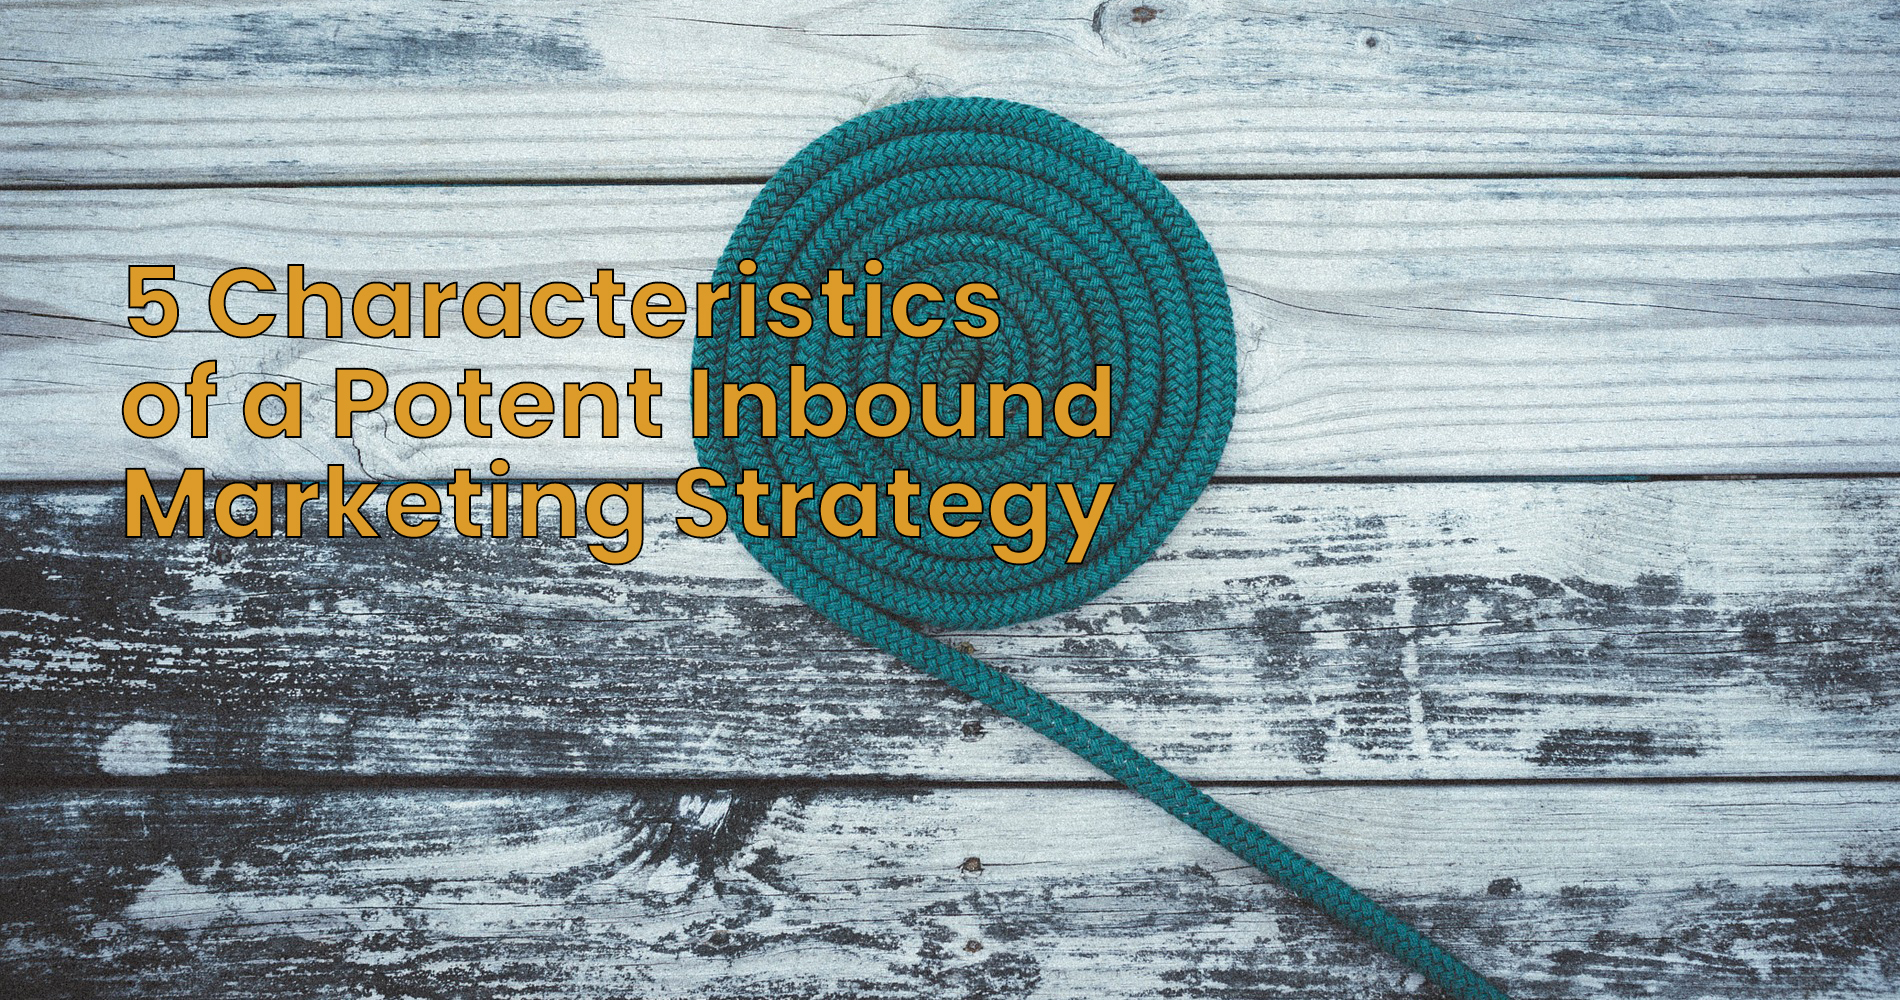 5 Characteristics of a Potent Inbound Marketing Strategy